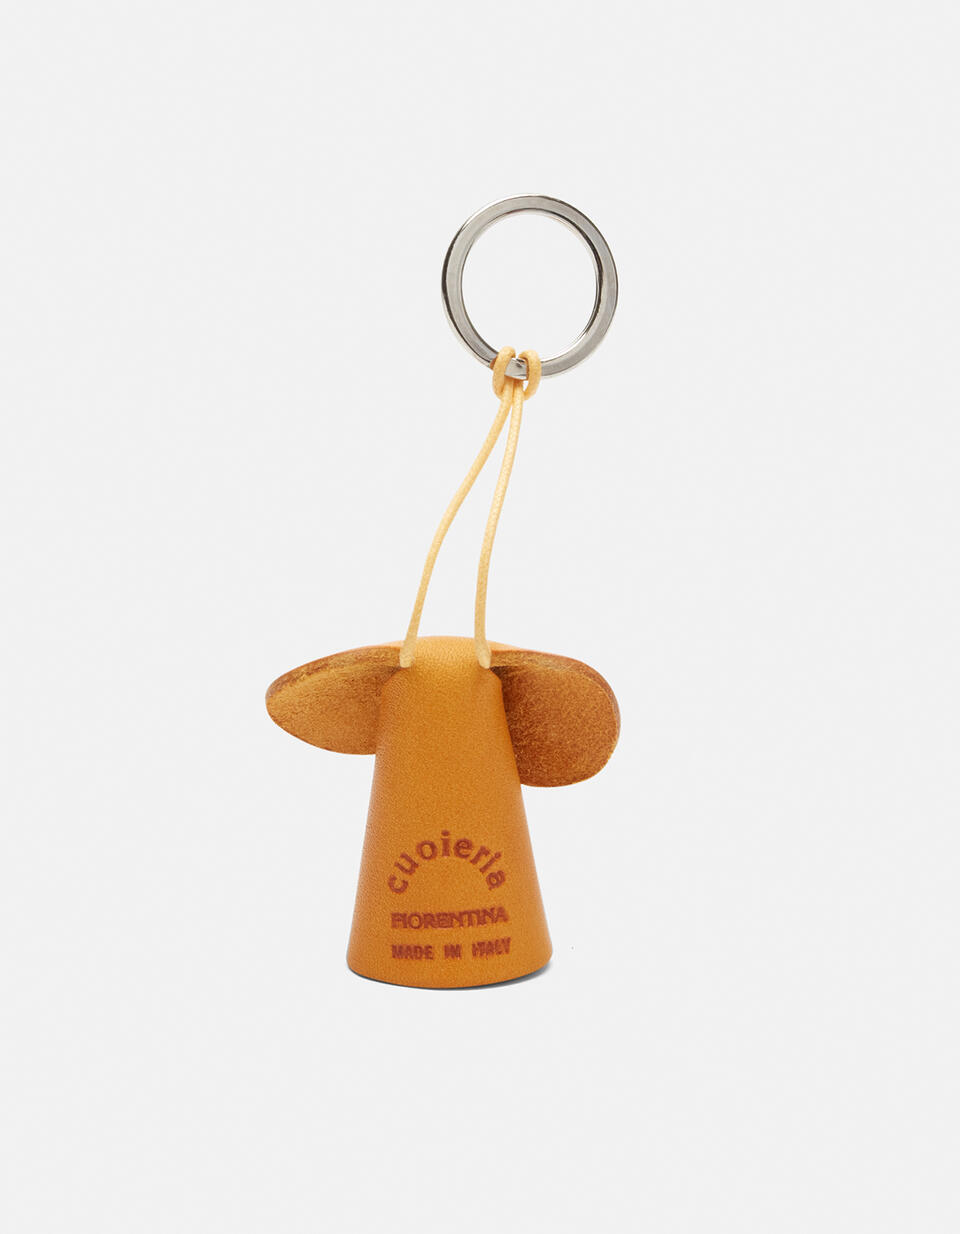 Elefant  Leather keychain - Key holders - Women's Accessories | Accessories  - Key holders - Women's Accessories | AccessoriesCuoieria Fiorentina